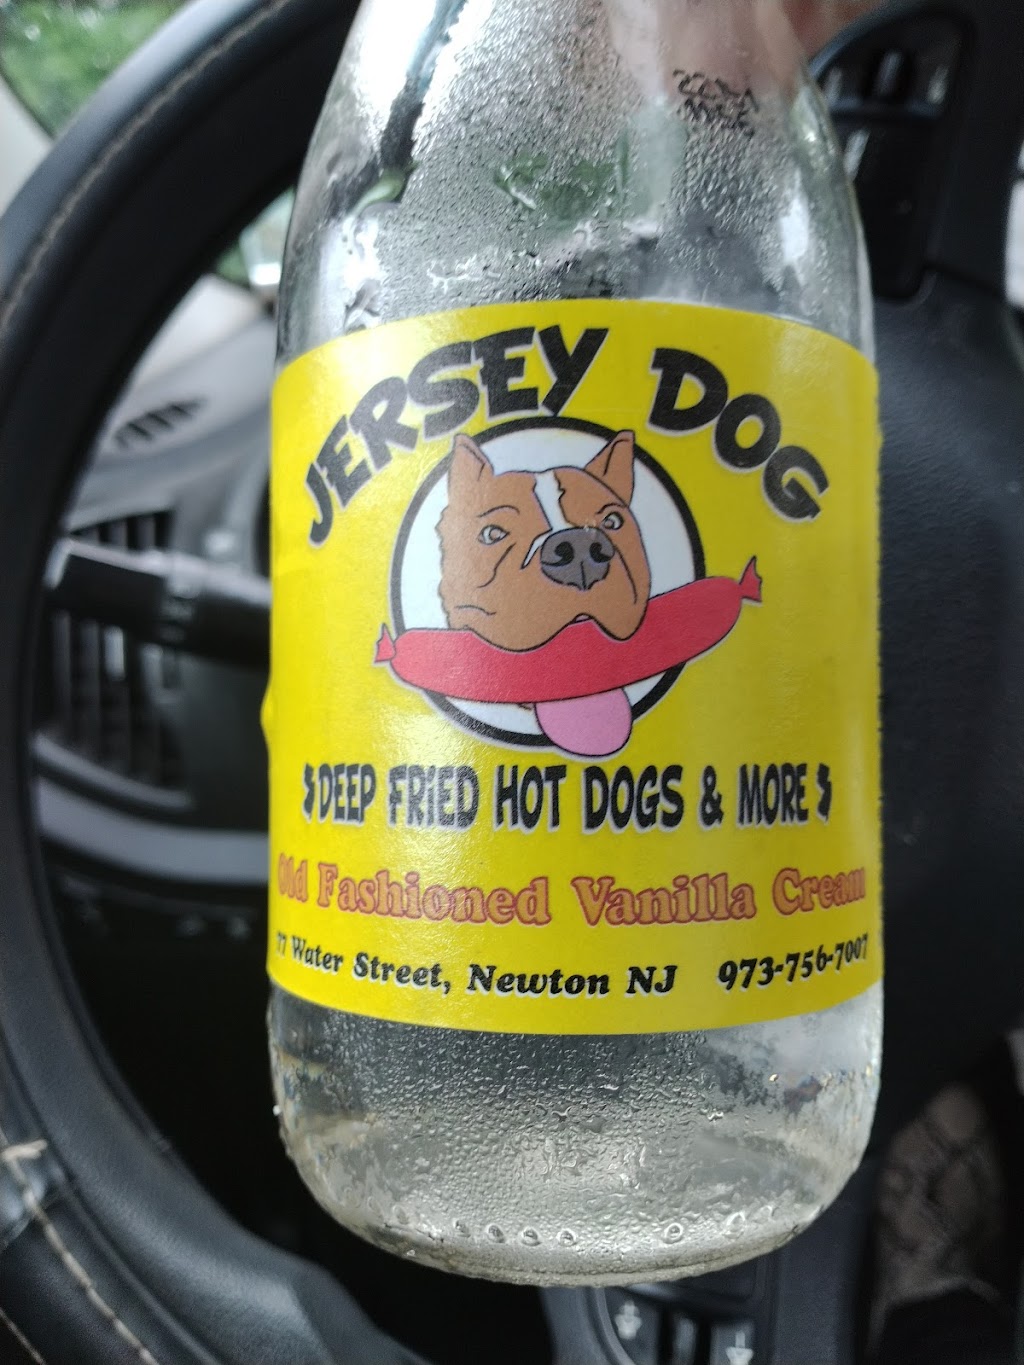 Jersey Dog | 77 Water St, Newton, NJ 07860 | Phone: (973) 756-7007